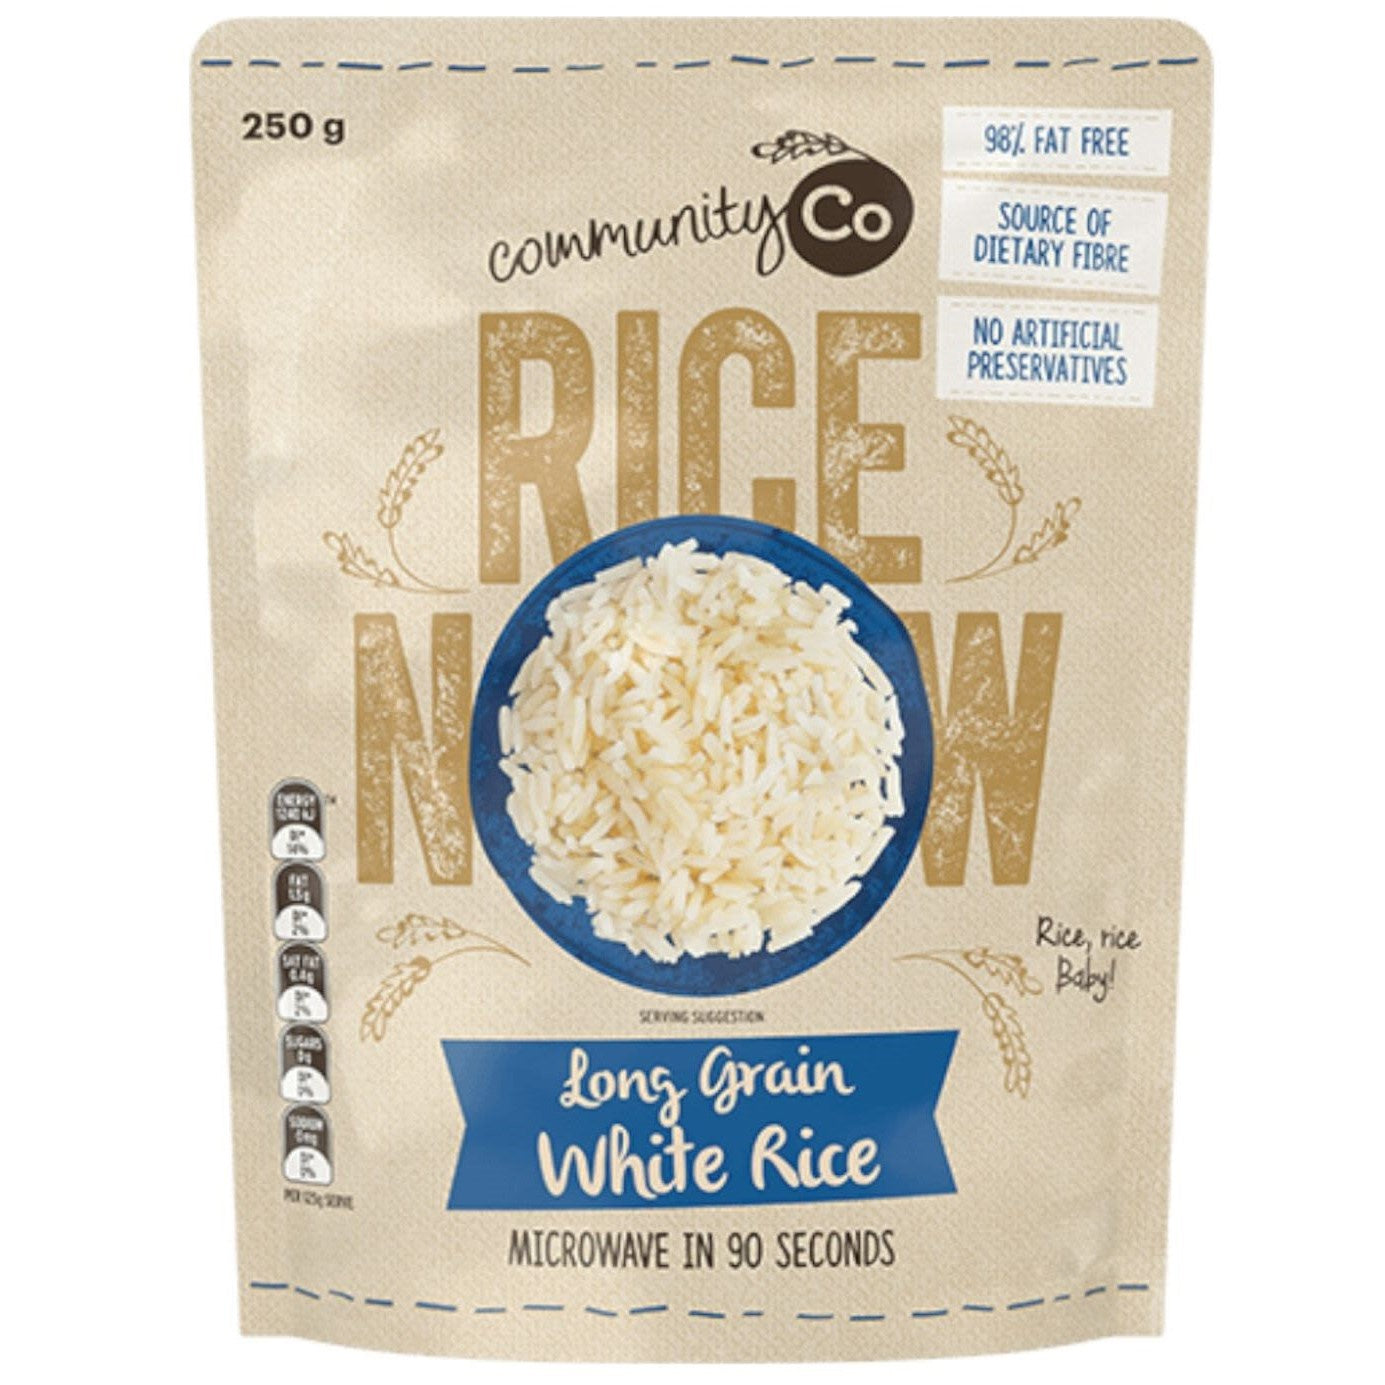 Community Co Microwavable Rice, Long Grain 250g